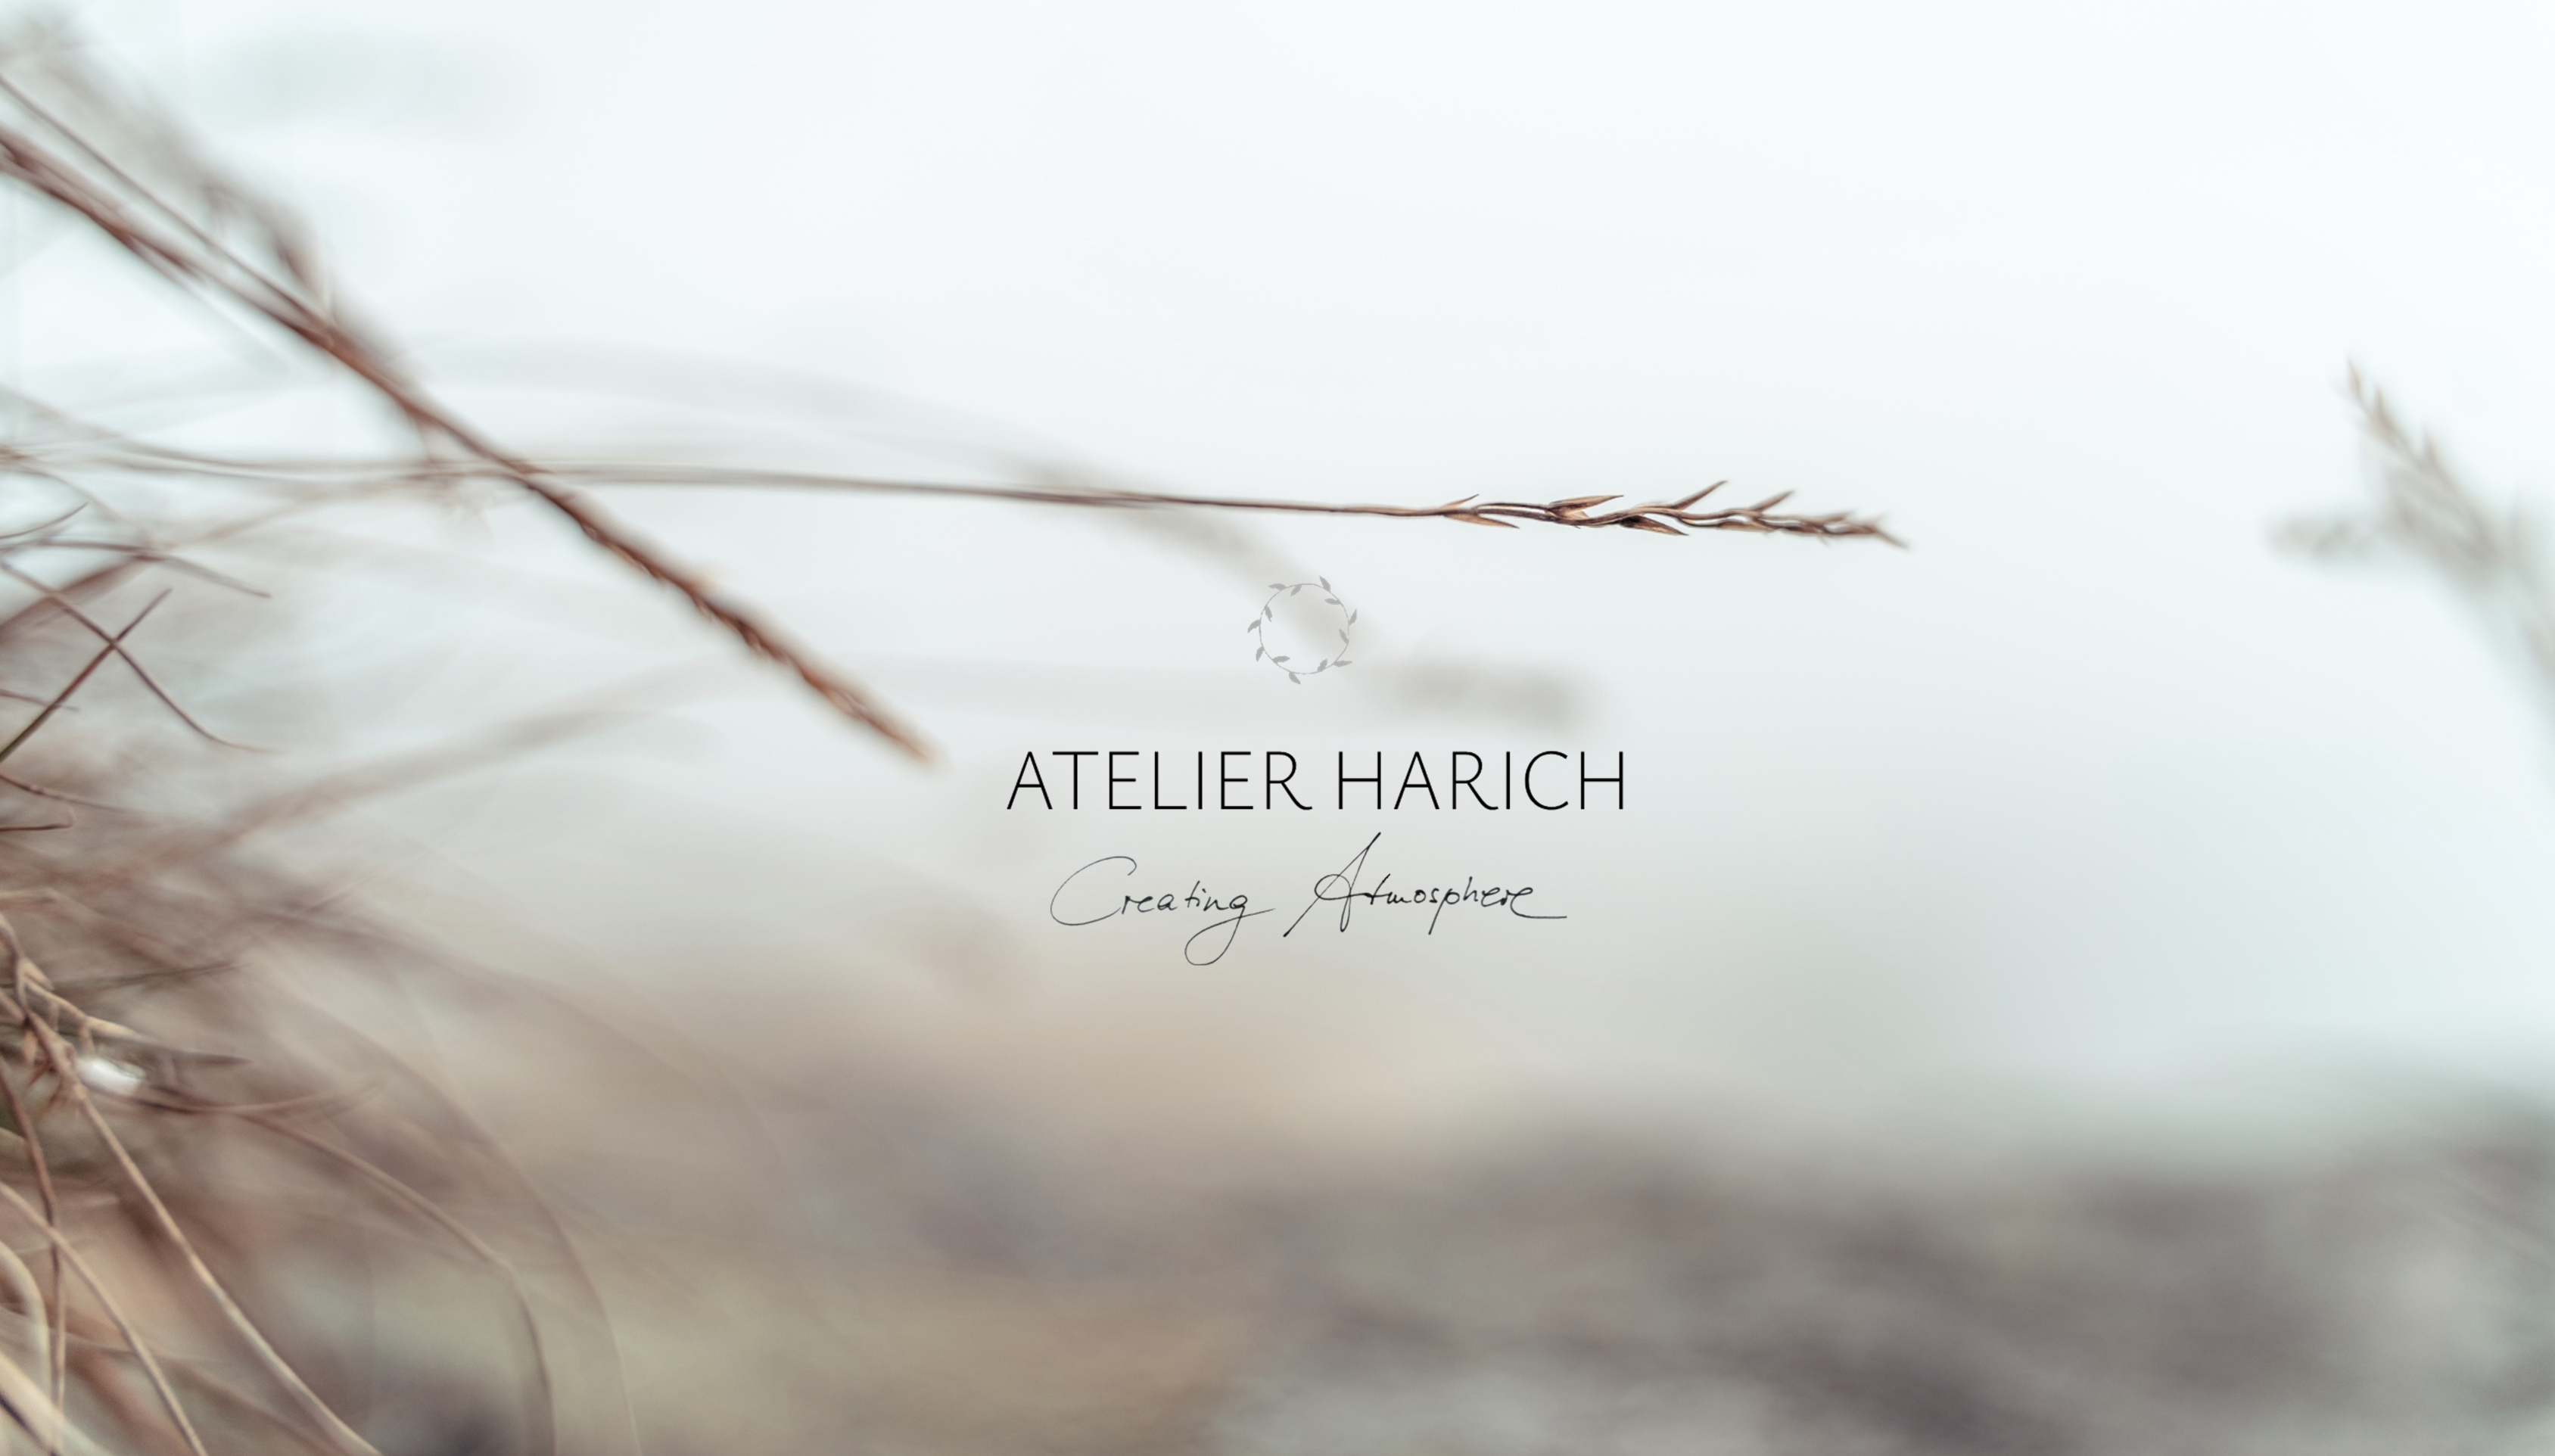 Neu/New: Atelier Harich – Creating Atmosphere